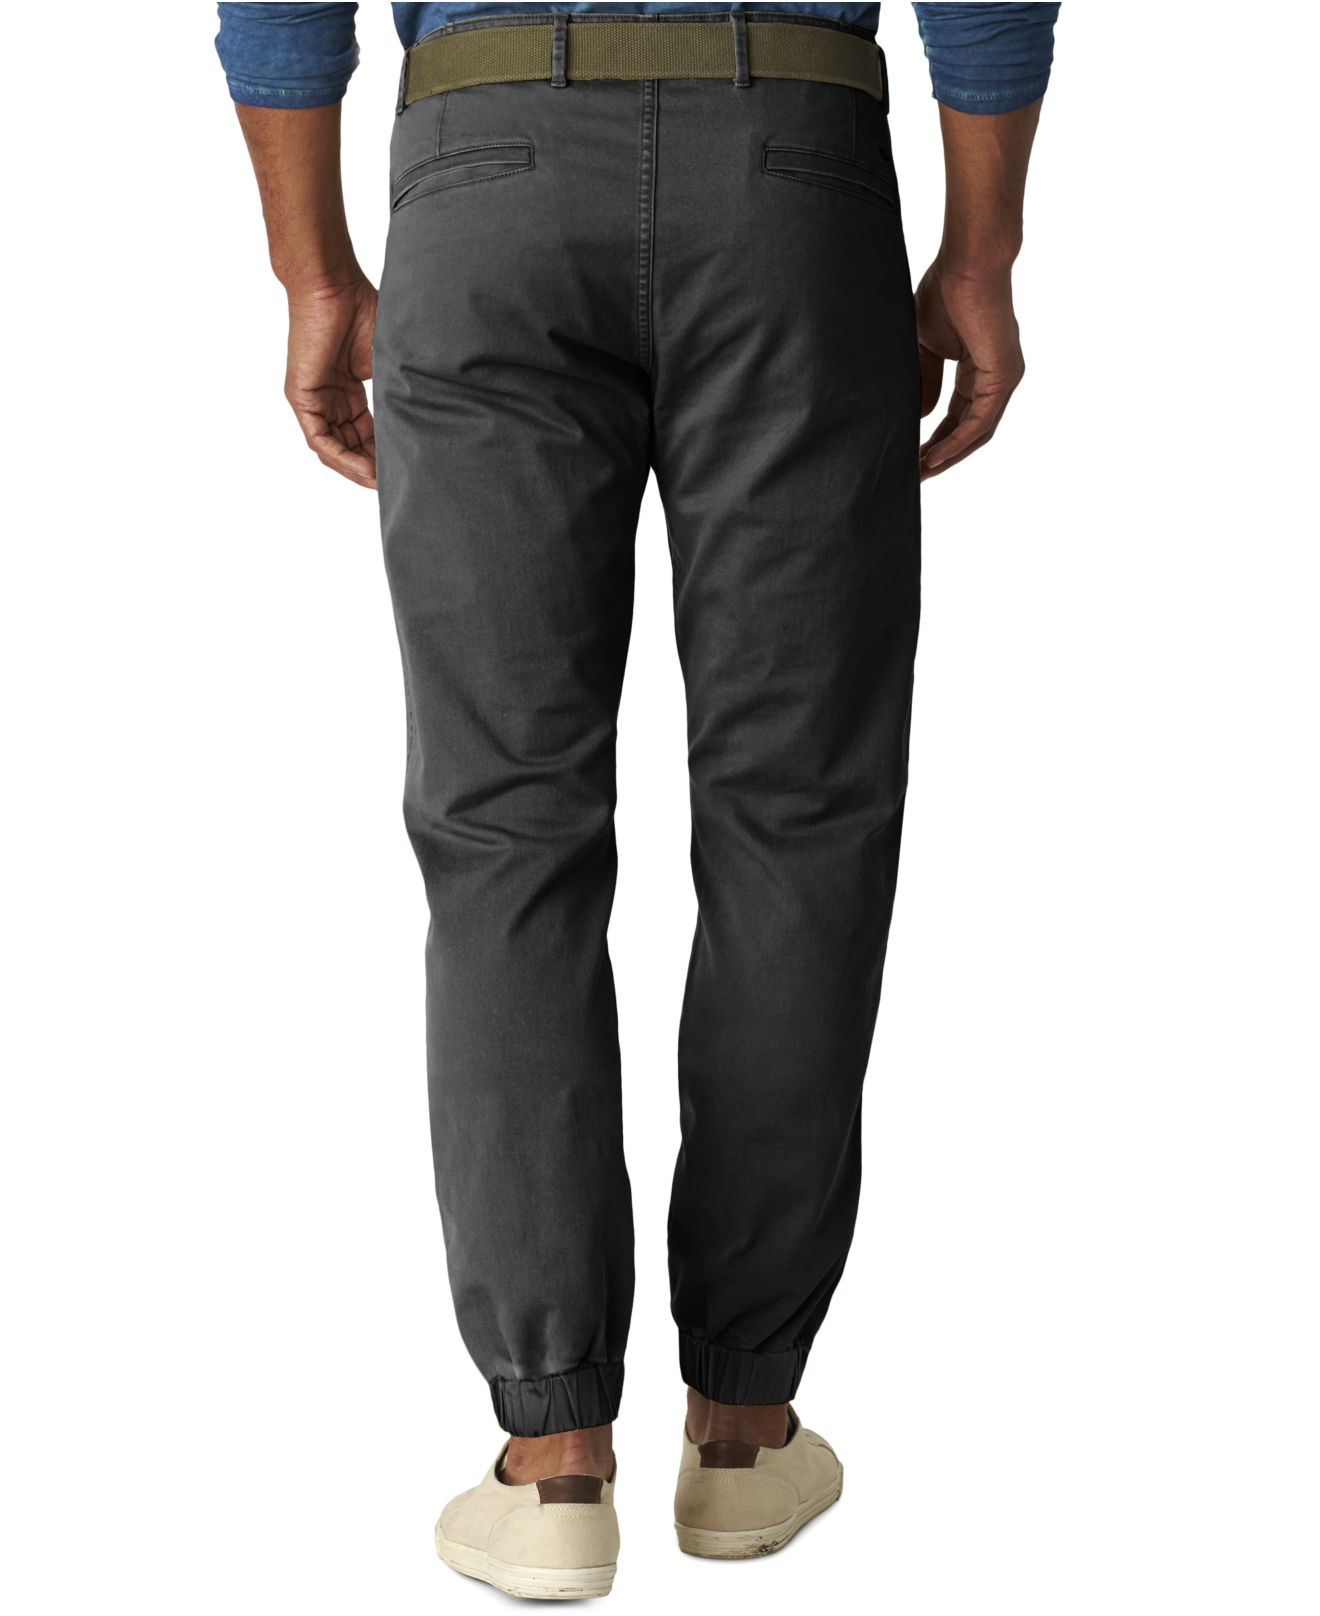 Lyst - Dockers Alpha Slim-fit Jogger Pants in Black for Men